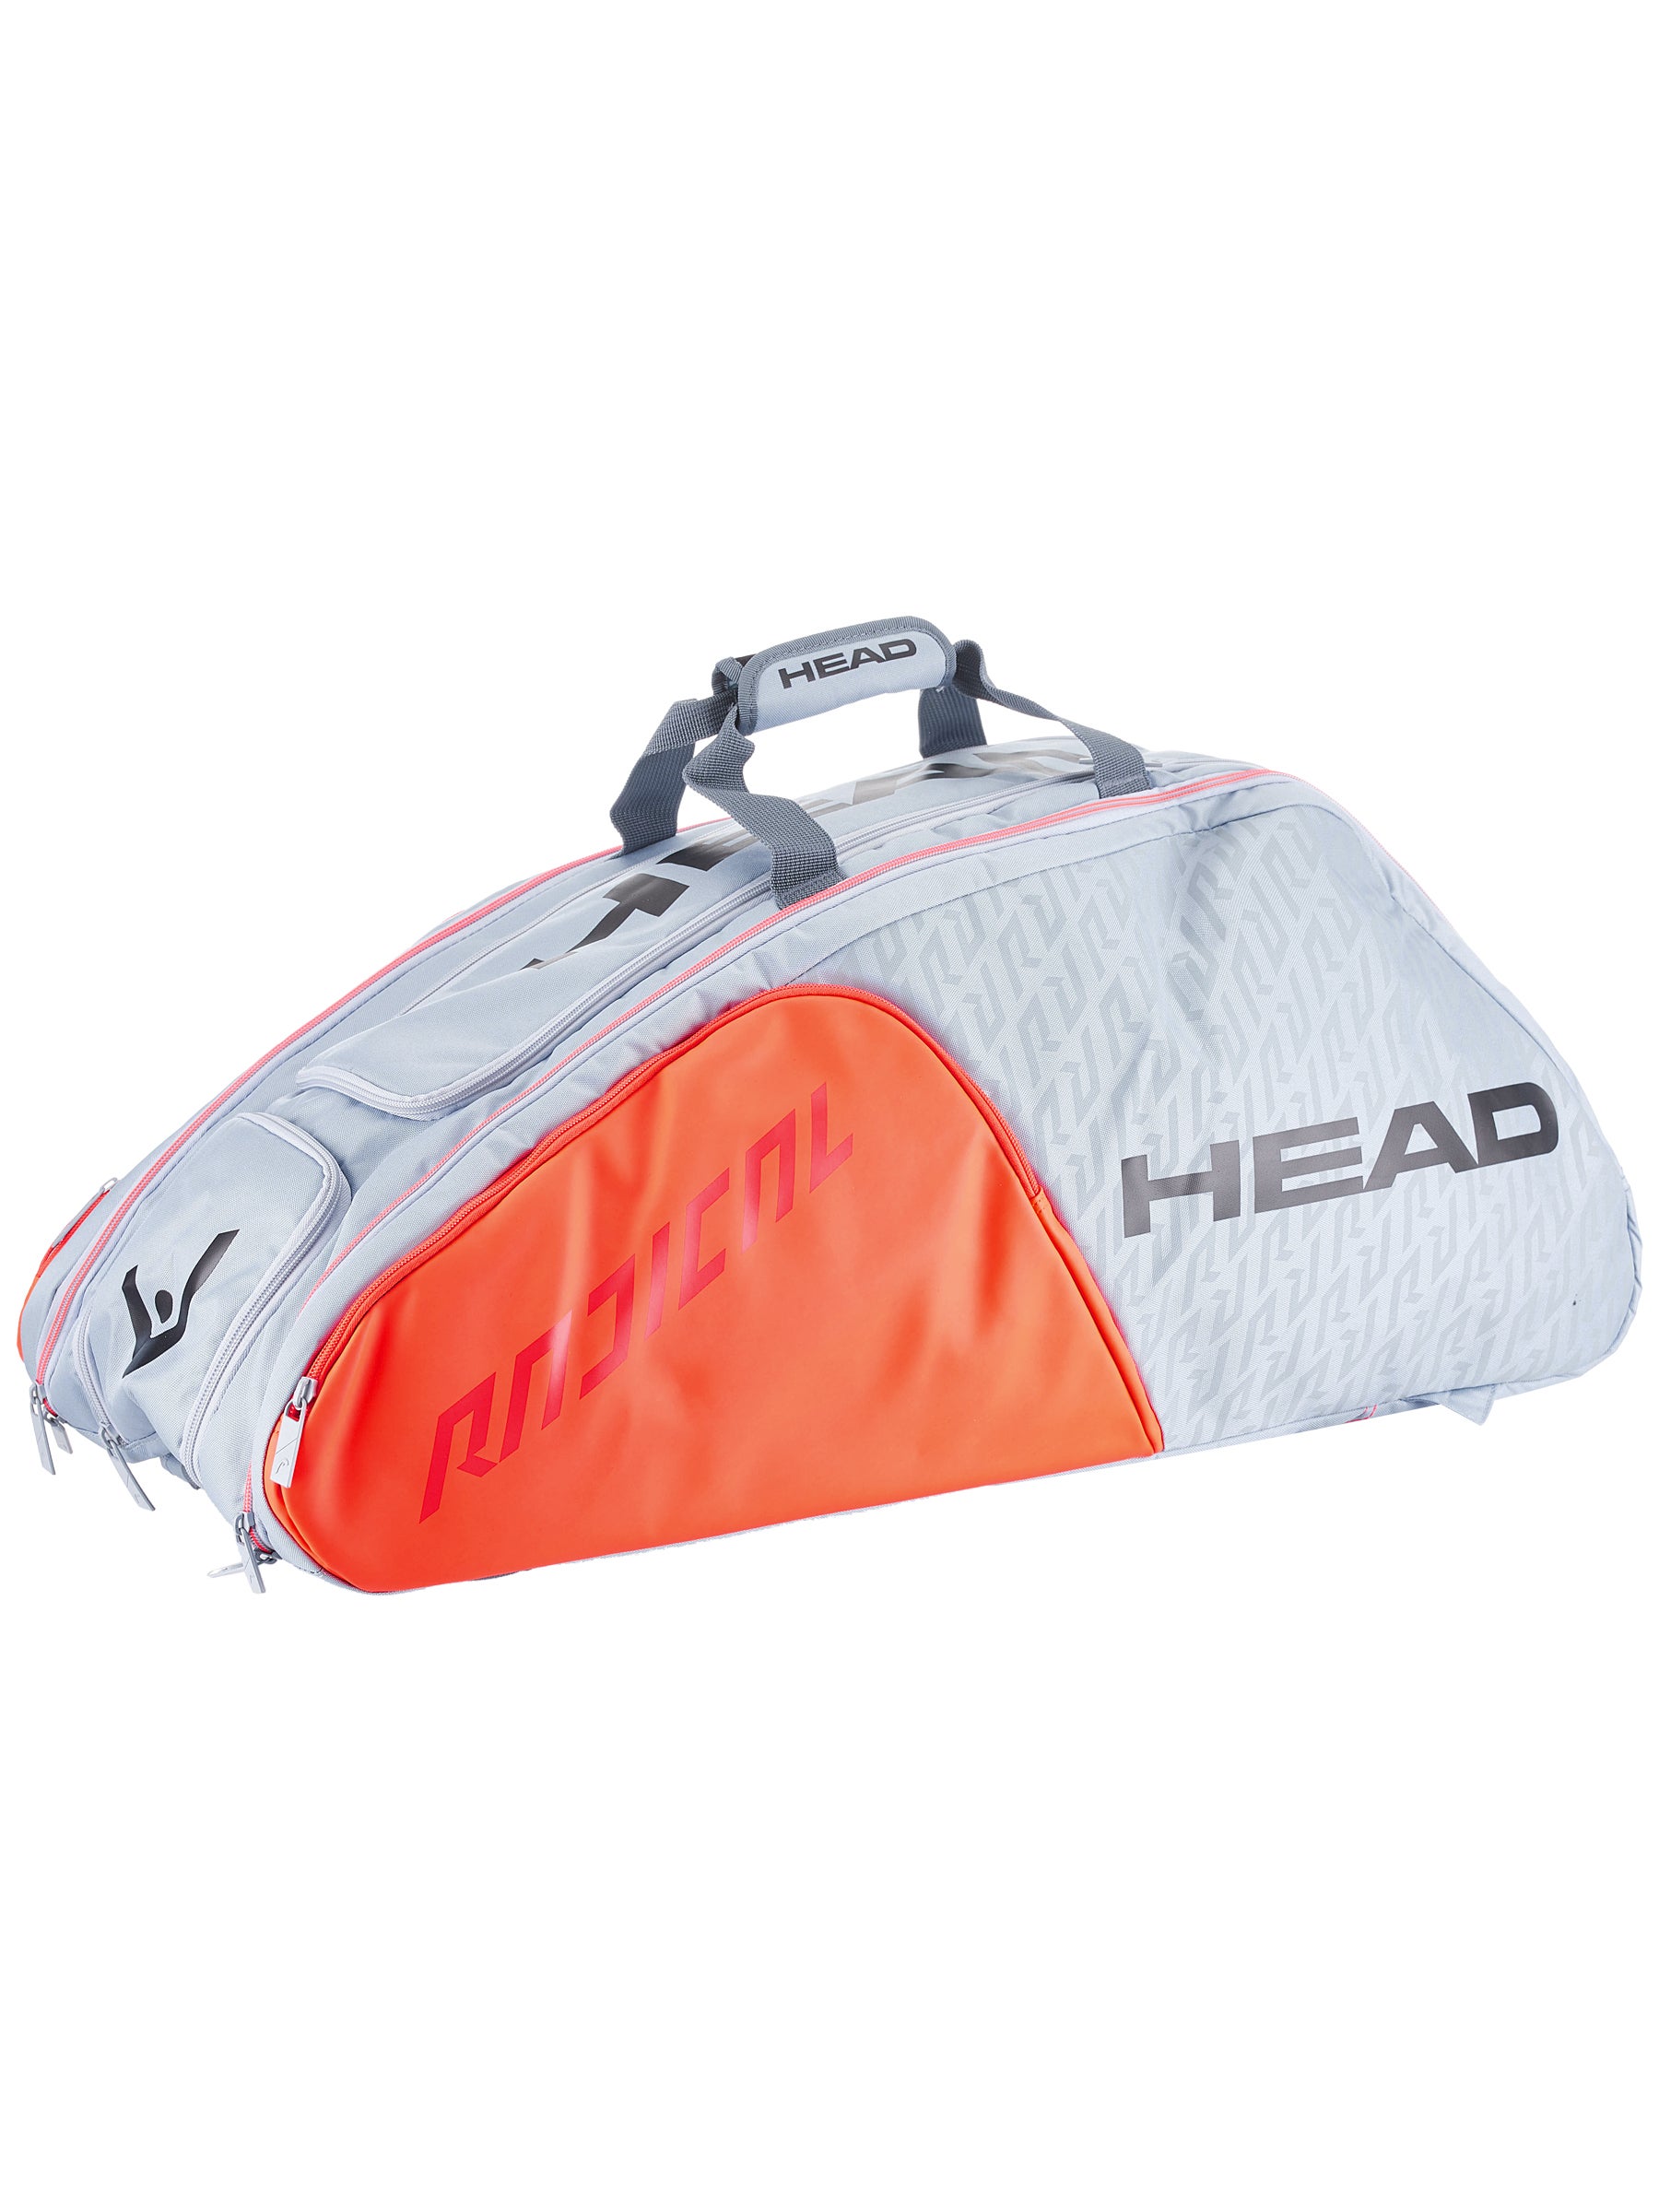 Head Murray Radical 9R Supercombi Tennis Bag Black/Orange 